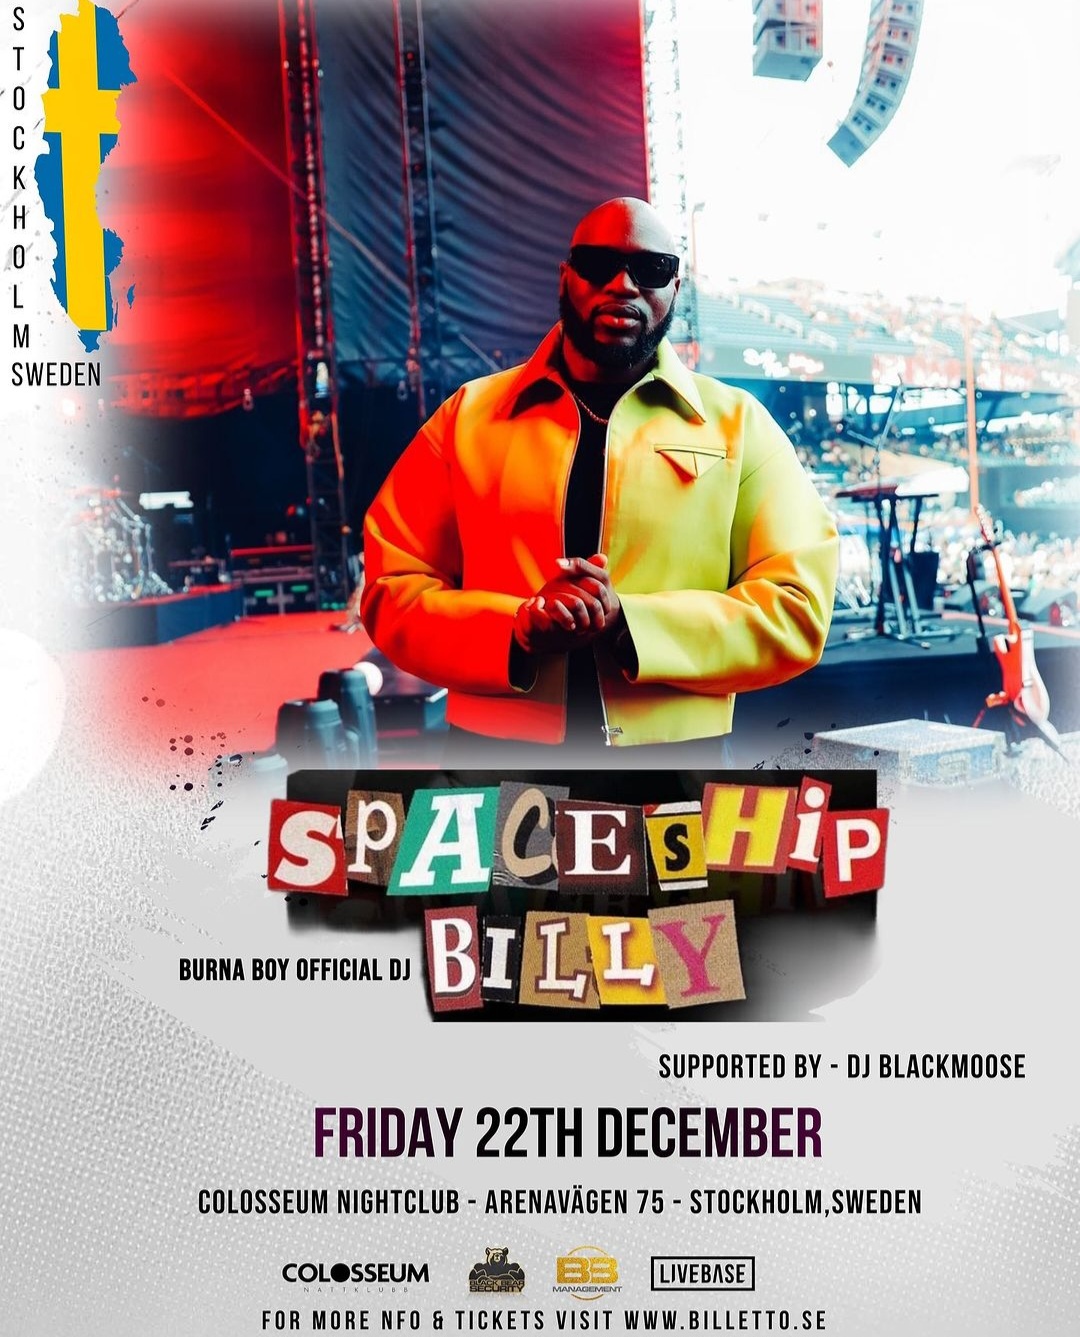 KLUBBGIG! DJ Space ship Billy live!  (STOCKHOLM)